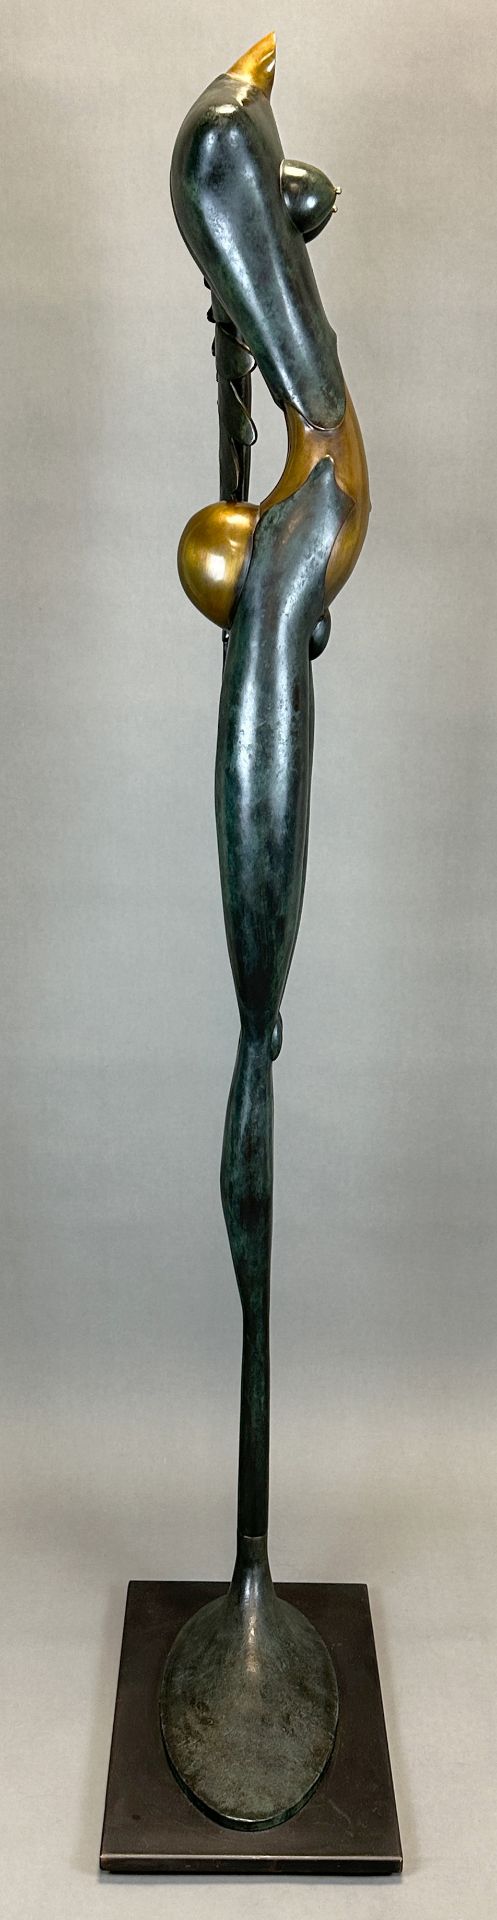 Paul WUNDERLICH (1927 - 2010). Bronze. "Large Nike". - Image 4 of 10